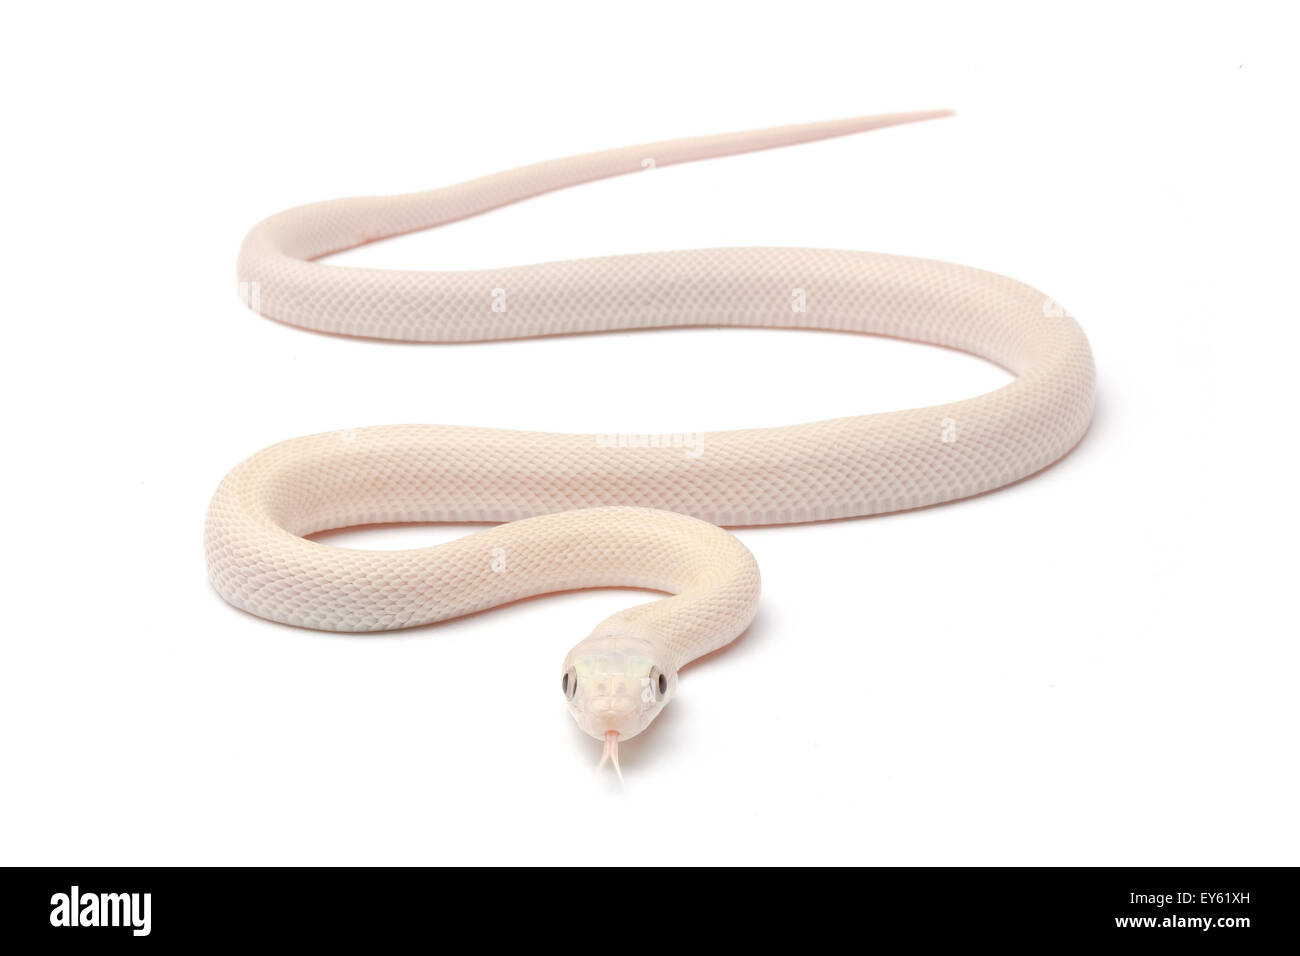 Texas rat snake 'Leucistic' on white background Stock Photo